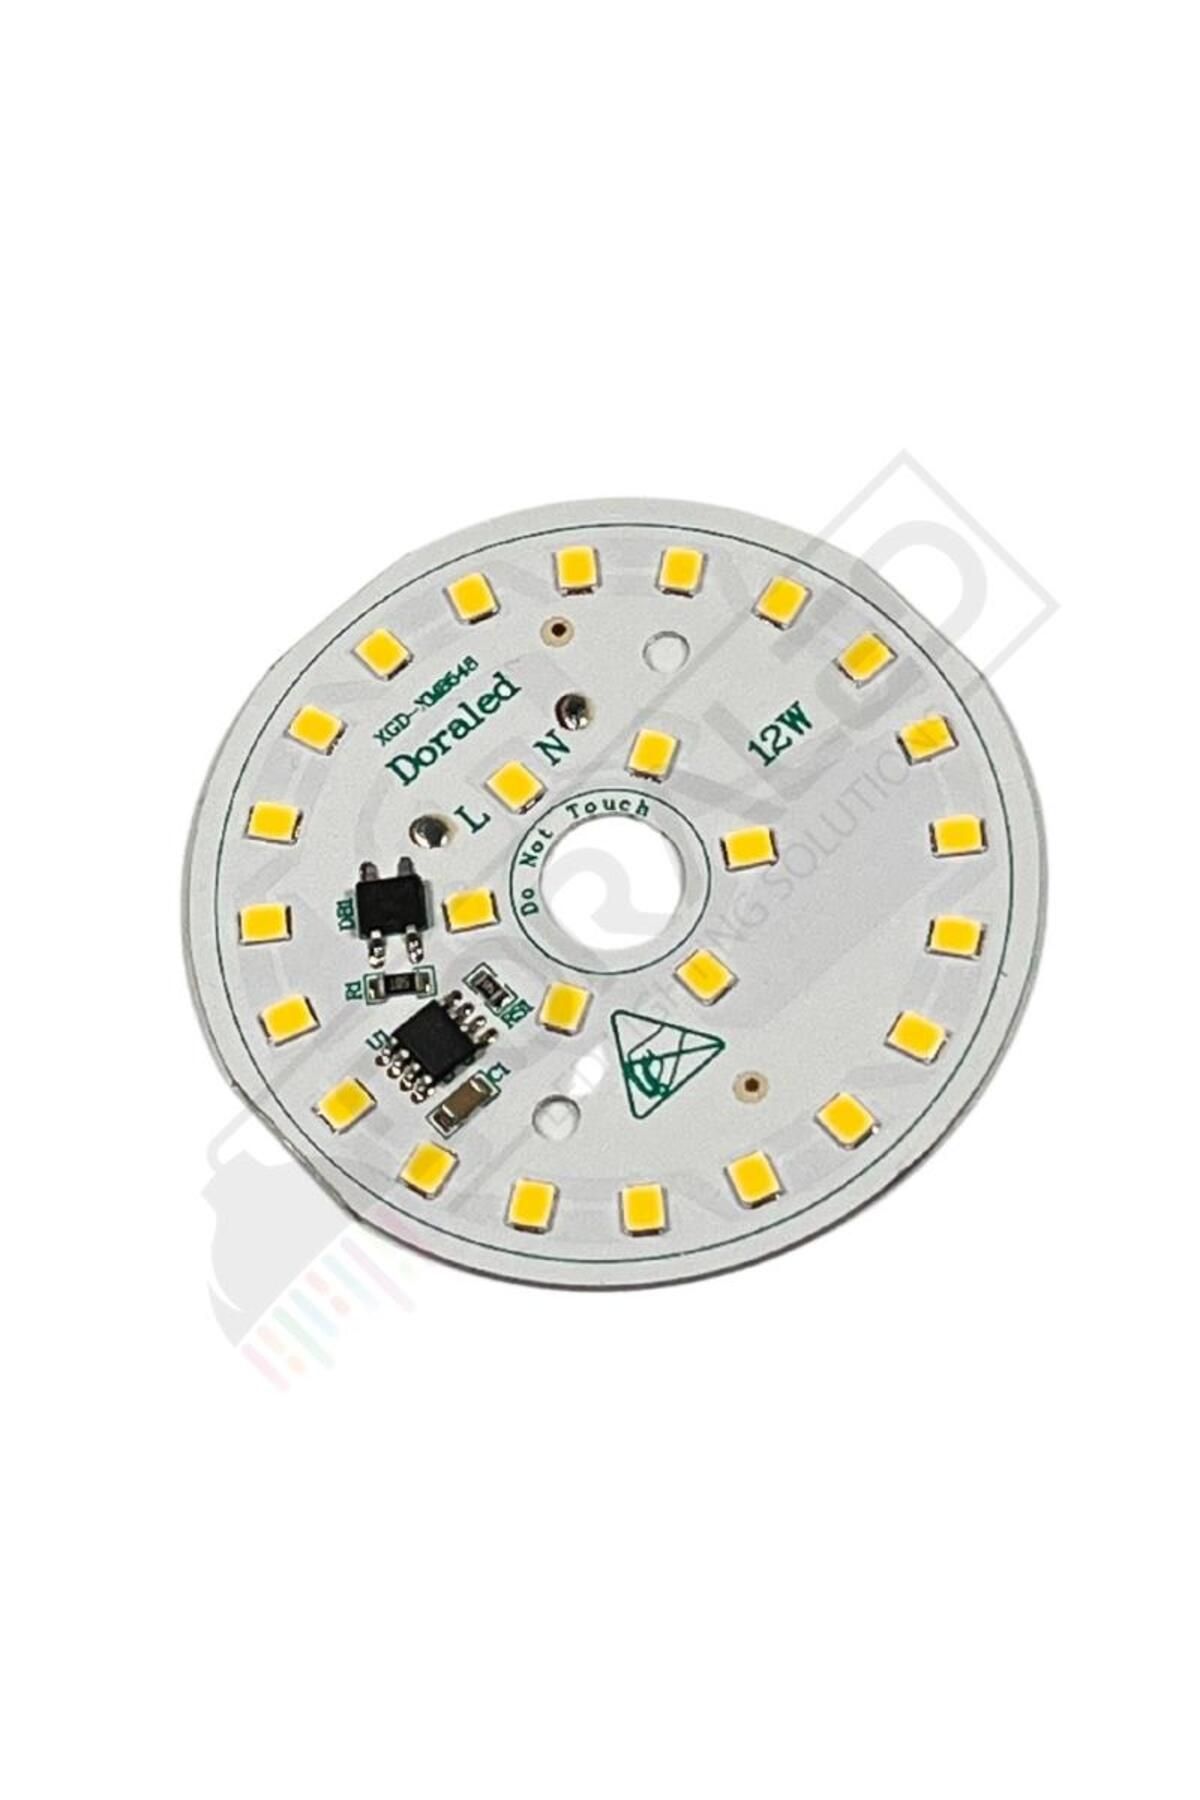 DORA LED 220volt 12watt Smd 5630 Ledli Led Modül Gün Işığı 10mm Delik Çaplı 220v 12w Avize Ledi 60mm(3 ADET)